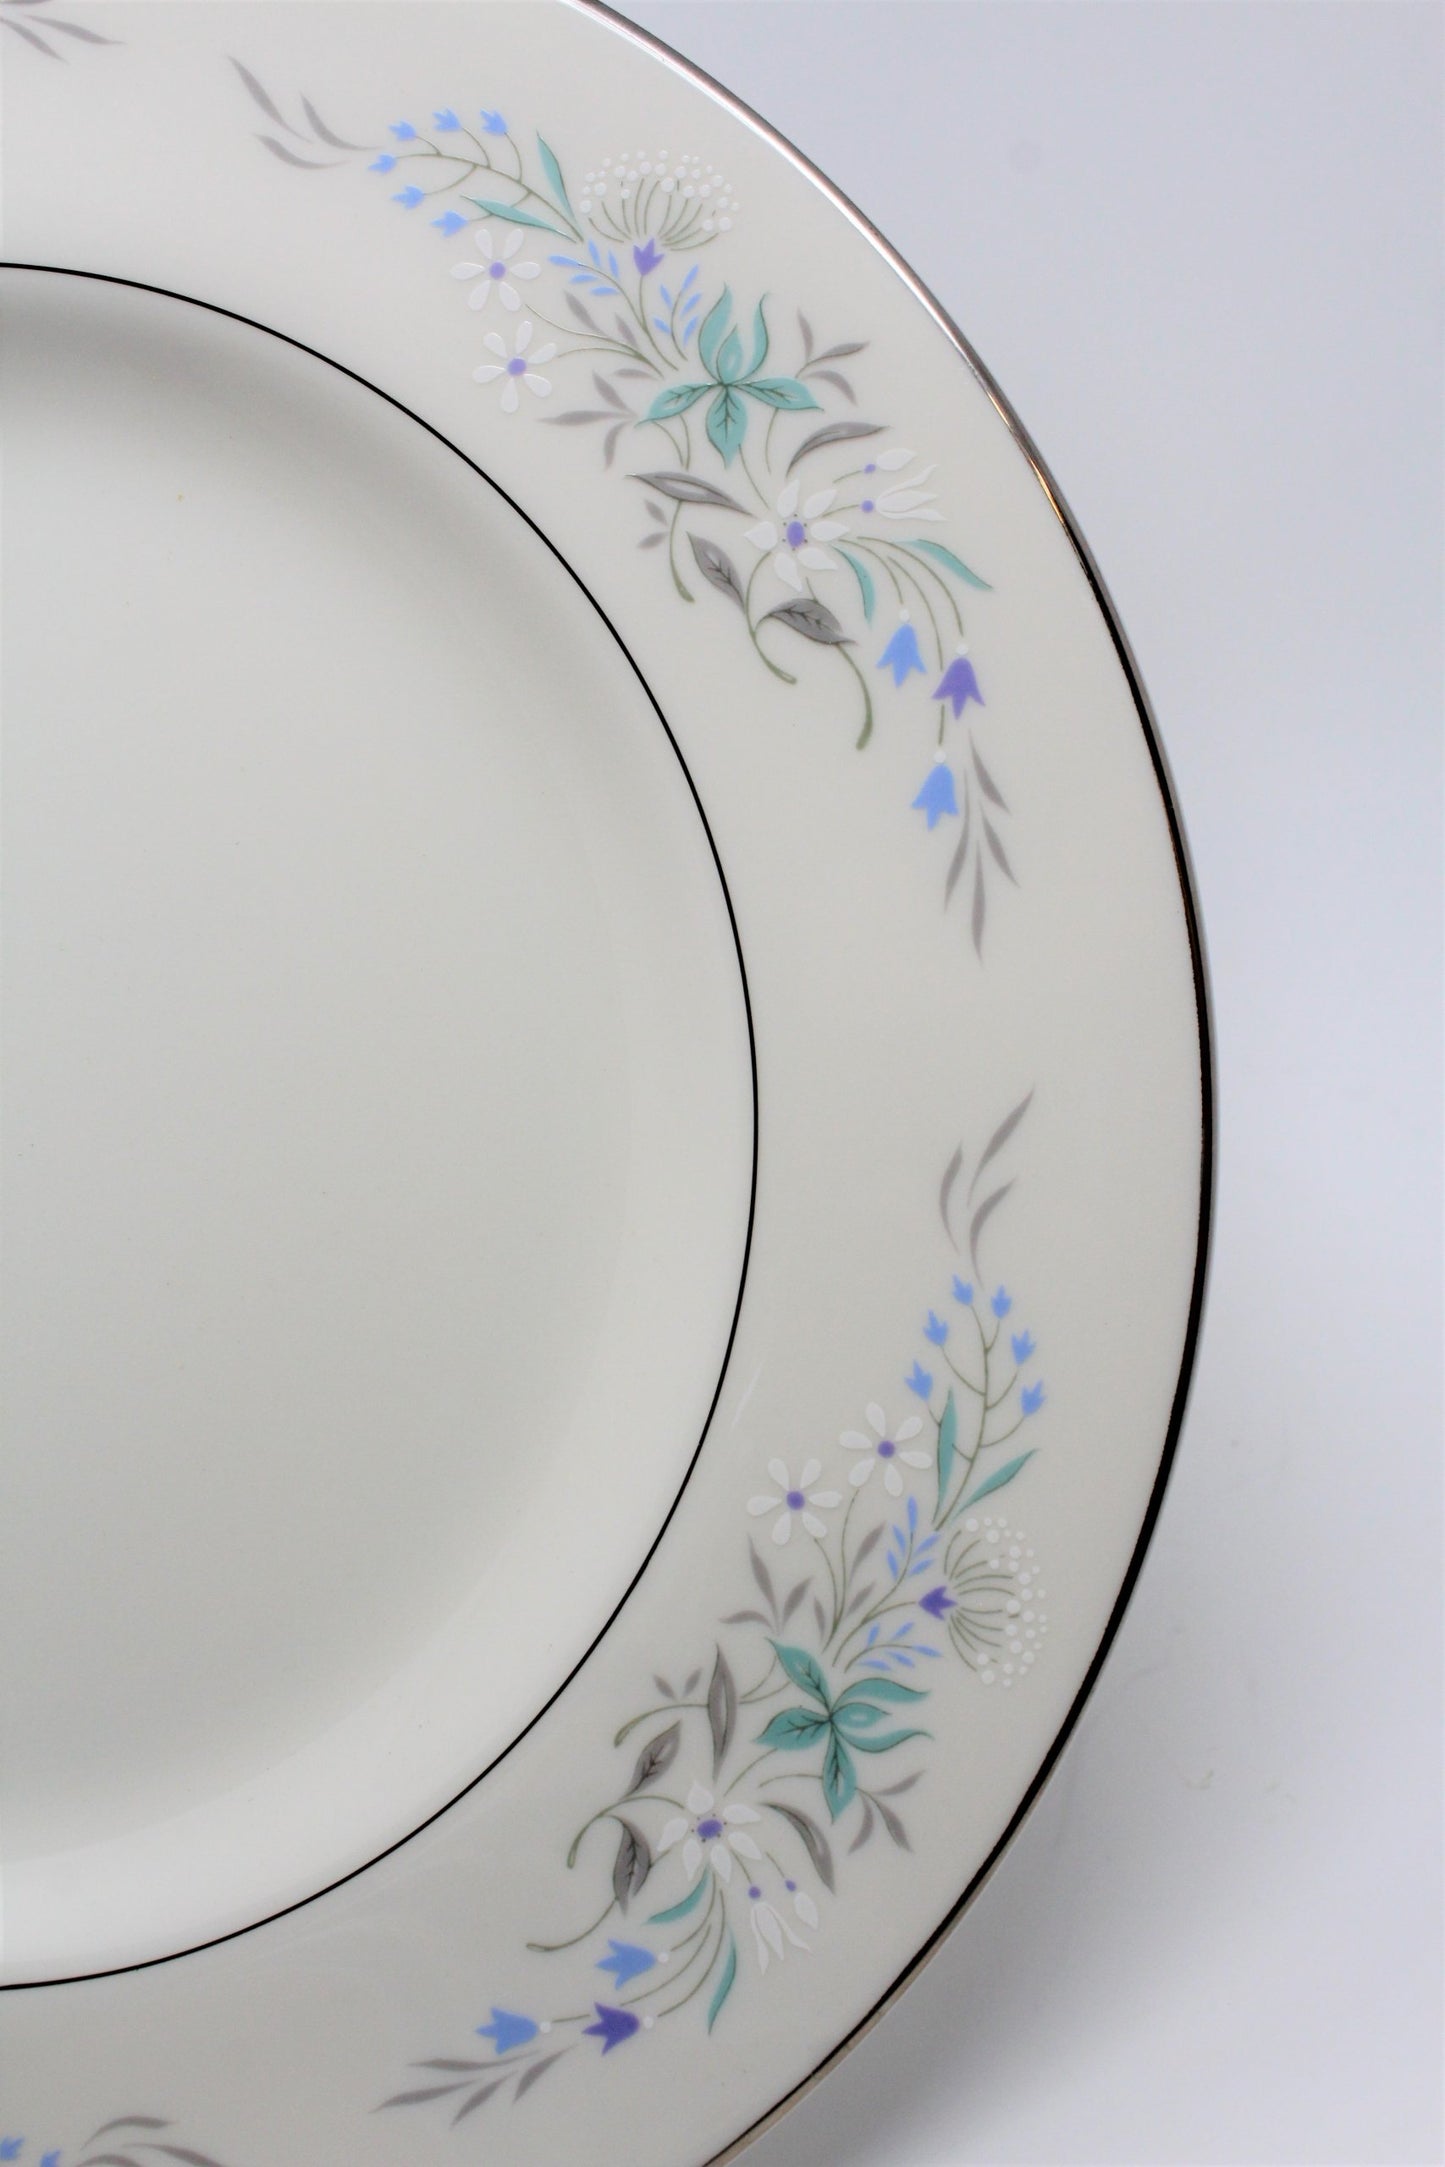 Dinner Plates, Pickard, Remembrance Fine China, Set of 4, Vintage